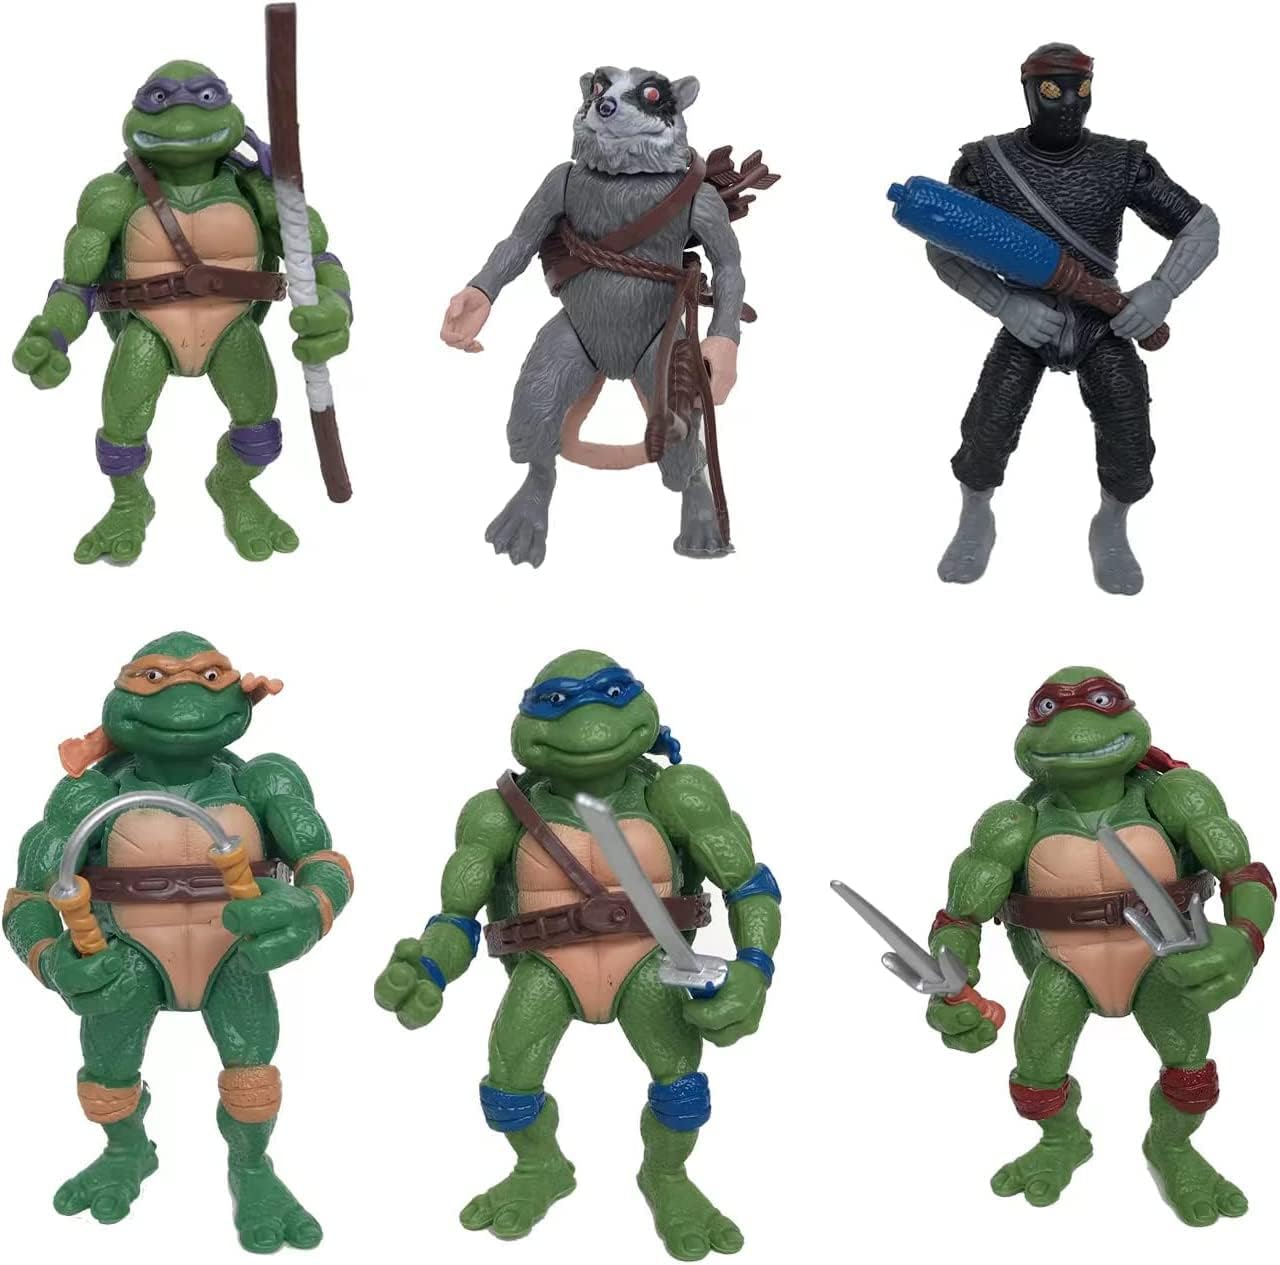 Tortugas Ninja de 4.8 pulgadas, paquete de 6 figuras